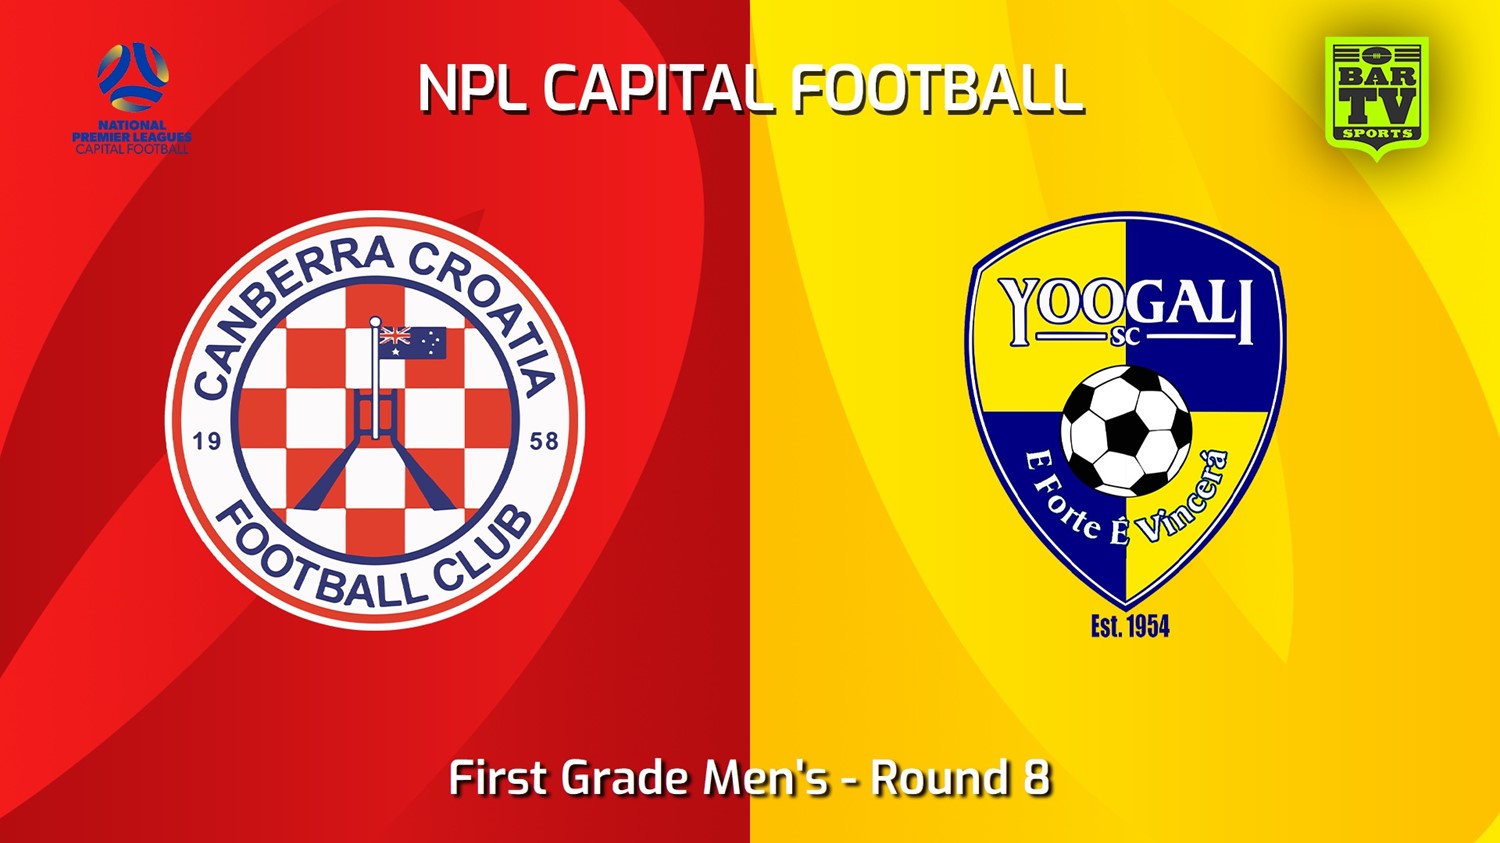 240526-video-Capital NPL Round 8 - Canberra Croatia FC v Yoogali SC Minigame Slate Image